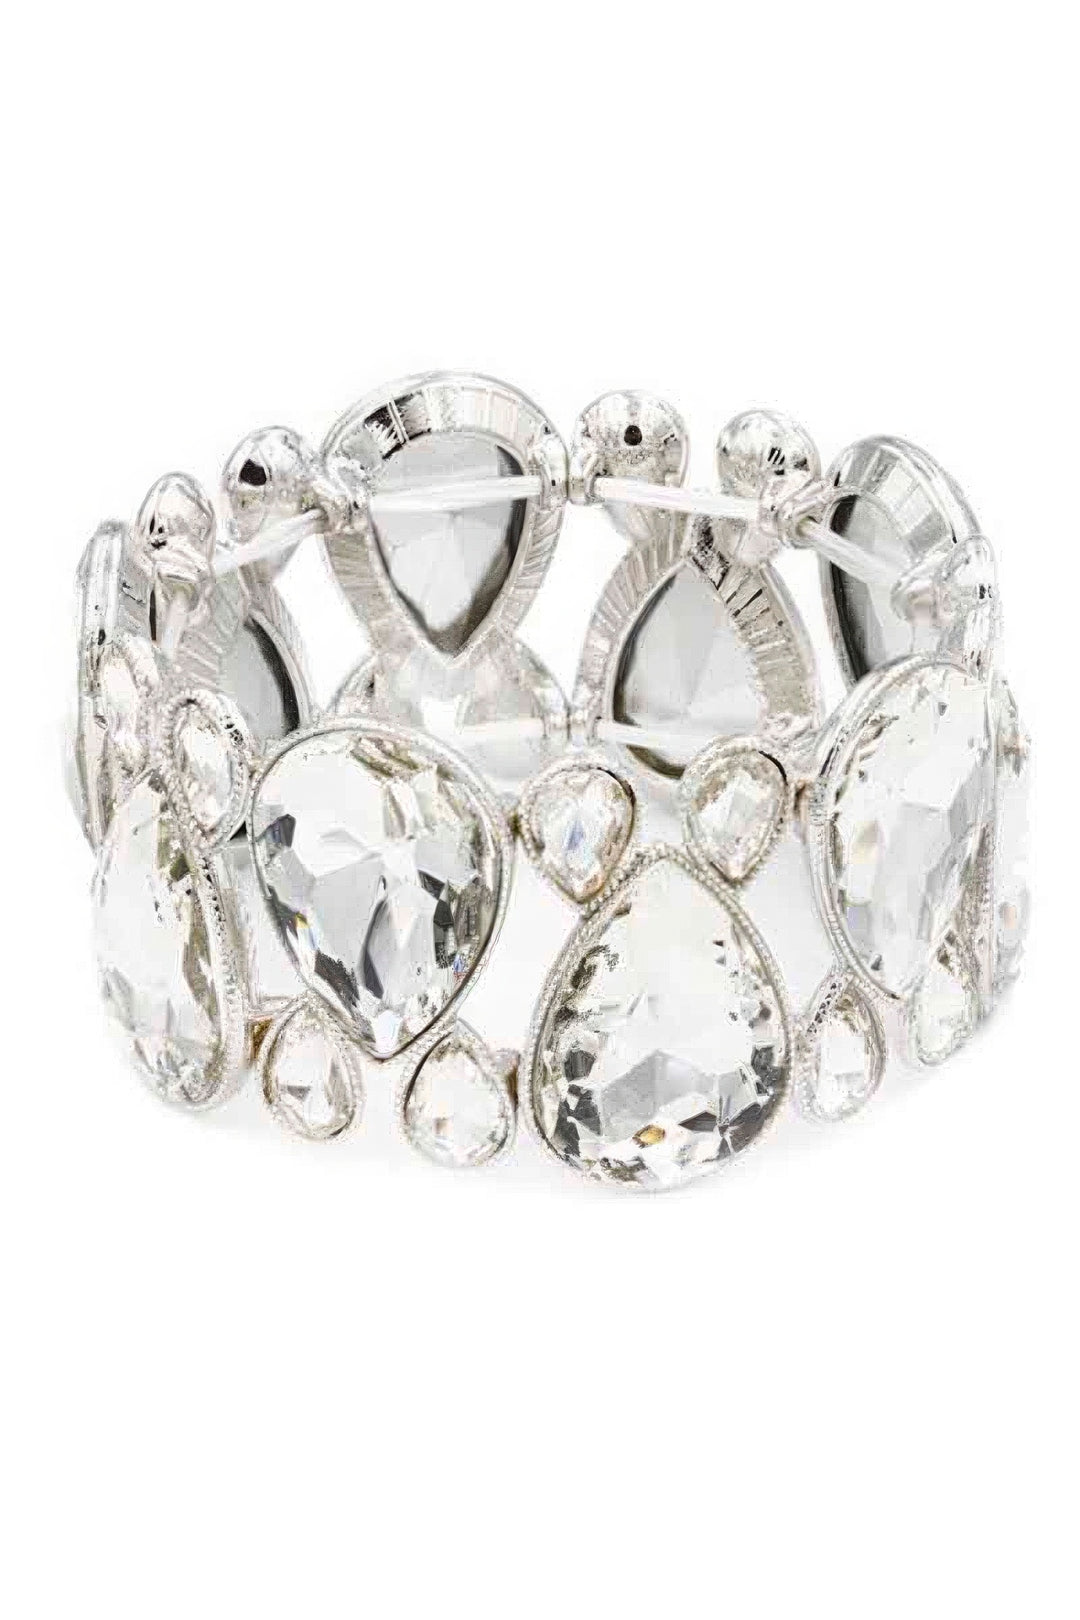 Crystal Stone Stretch Bracelet with Sparkling Gemstones & Stretchable Design in Multi, Black, Blue, Gold, Silver